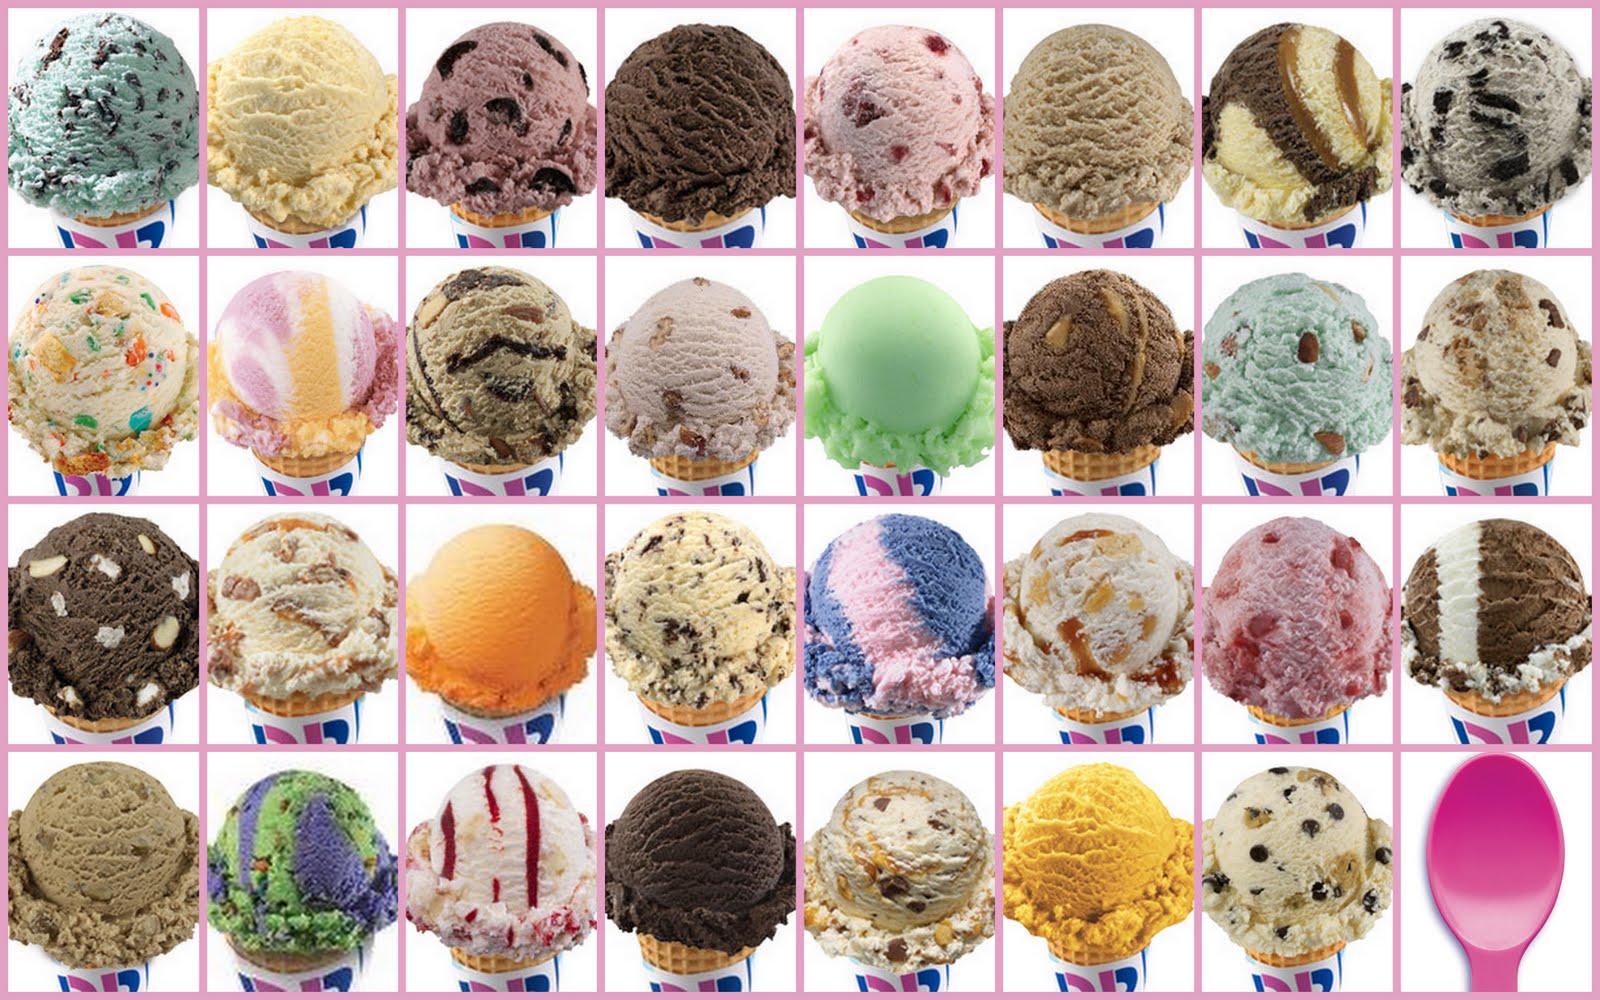 baskin robbins ice cream flavors